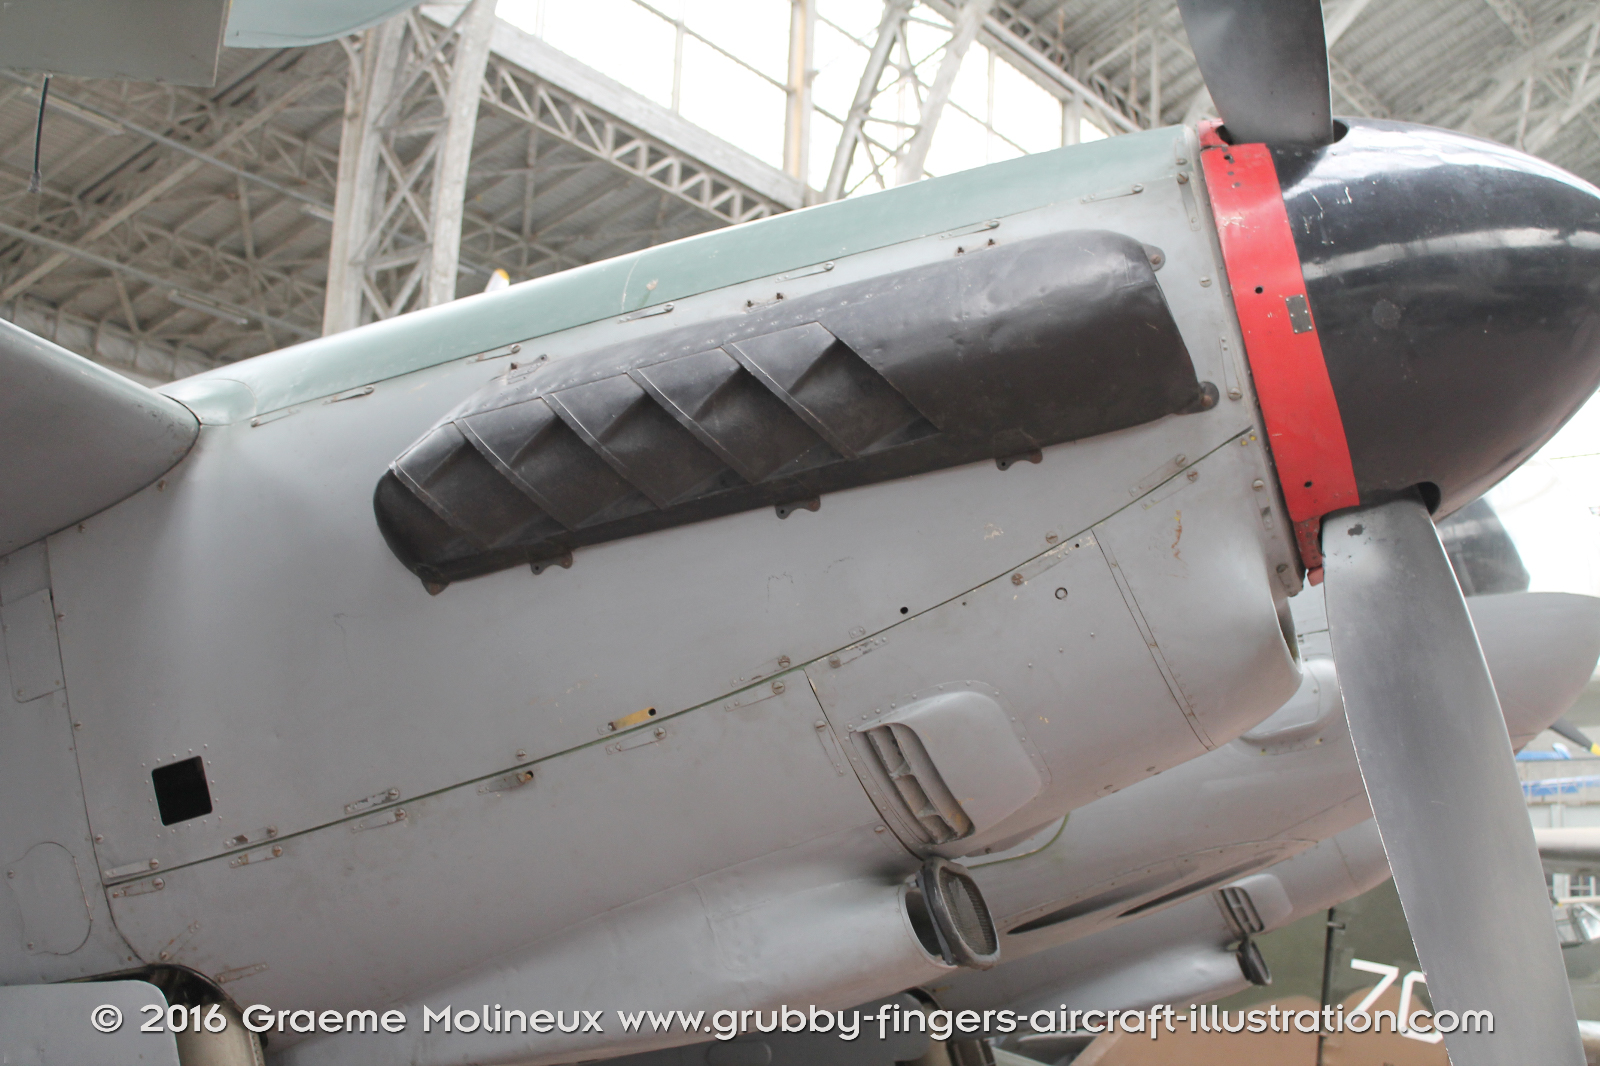 de_Havilland_Mosquito_Walkaround_Mk30_MB-42_Belgian_Air_Force_Museum_2015_23_GraemeMolineux